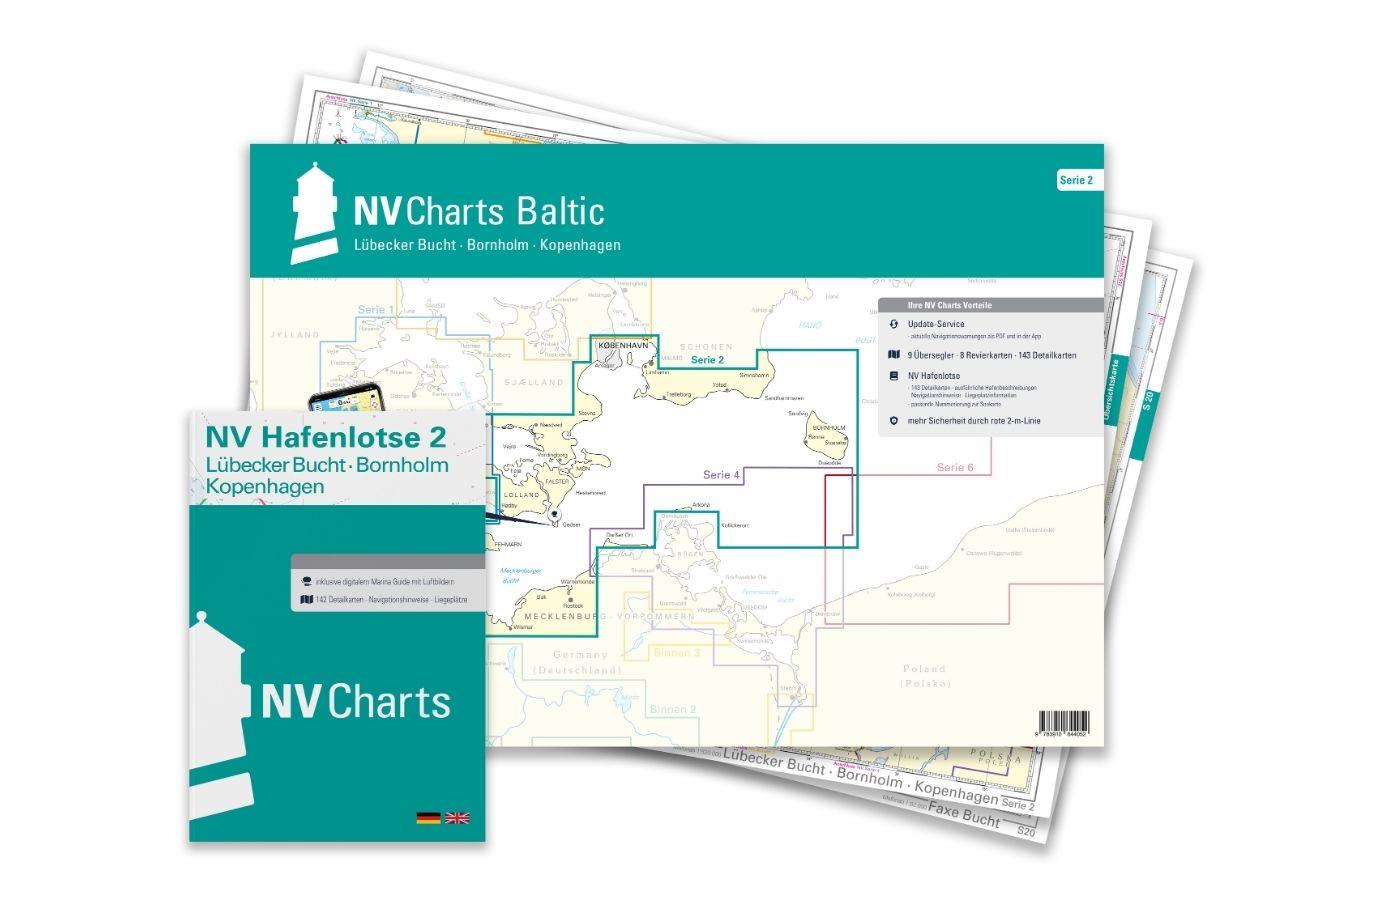 NV Charts Baltic Serie 2 Plano Lübecker Bucht - Bornholm - Kopenhagen